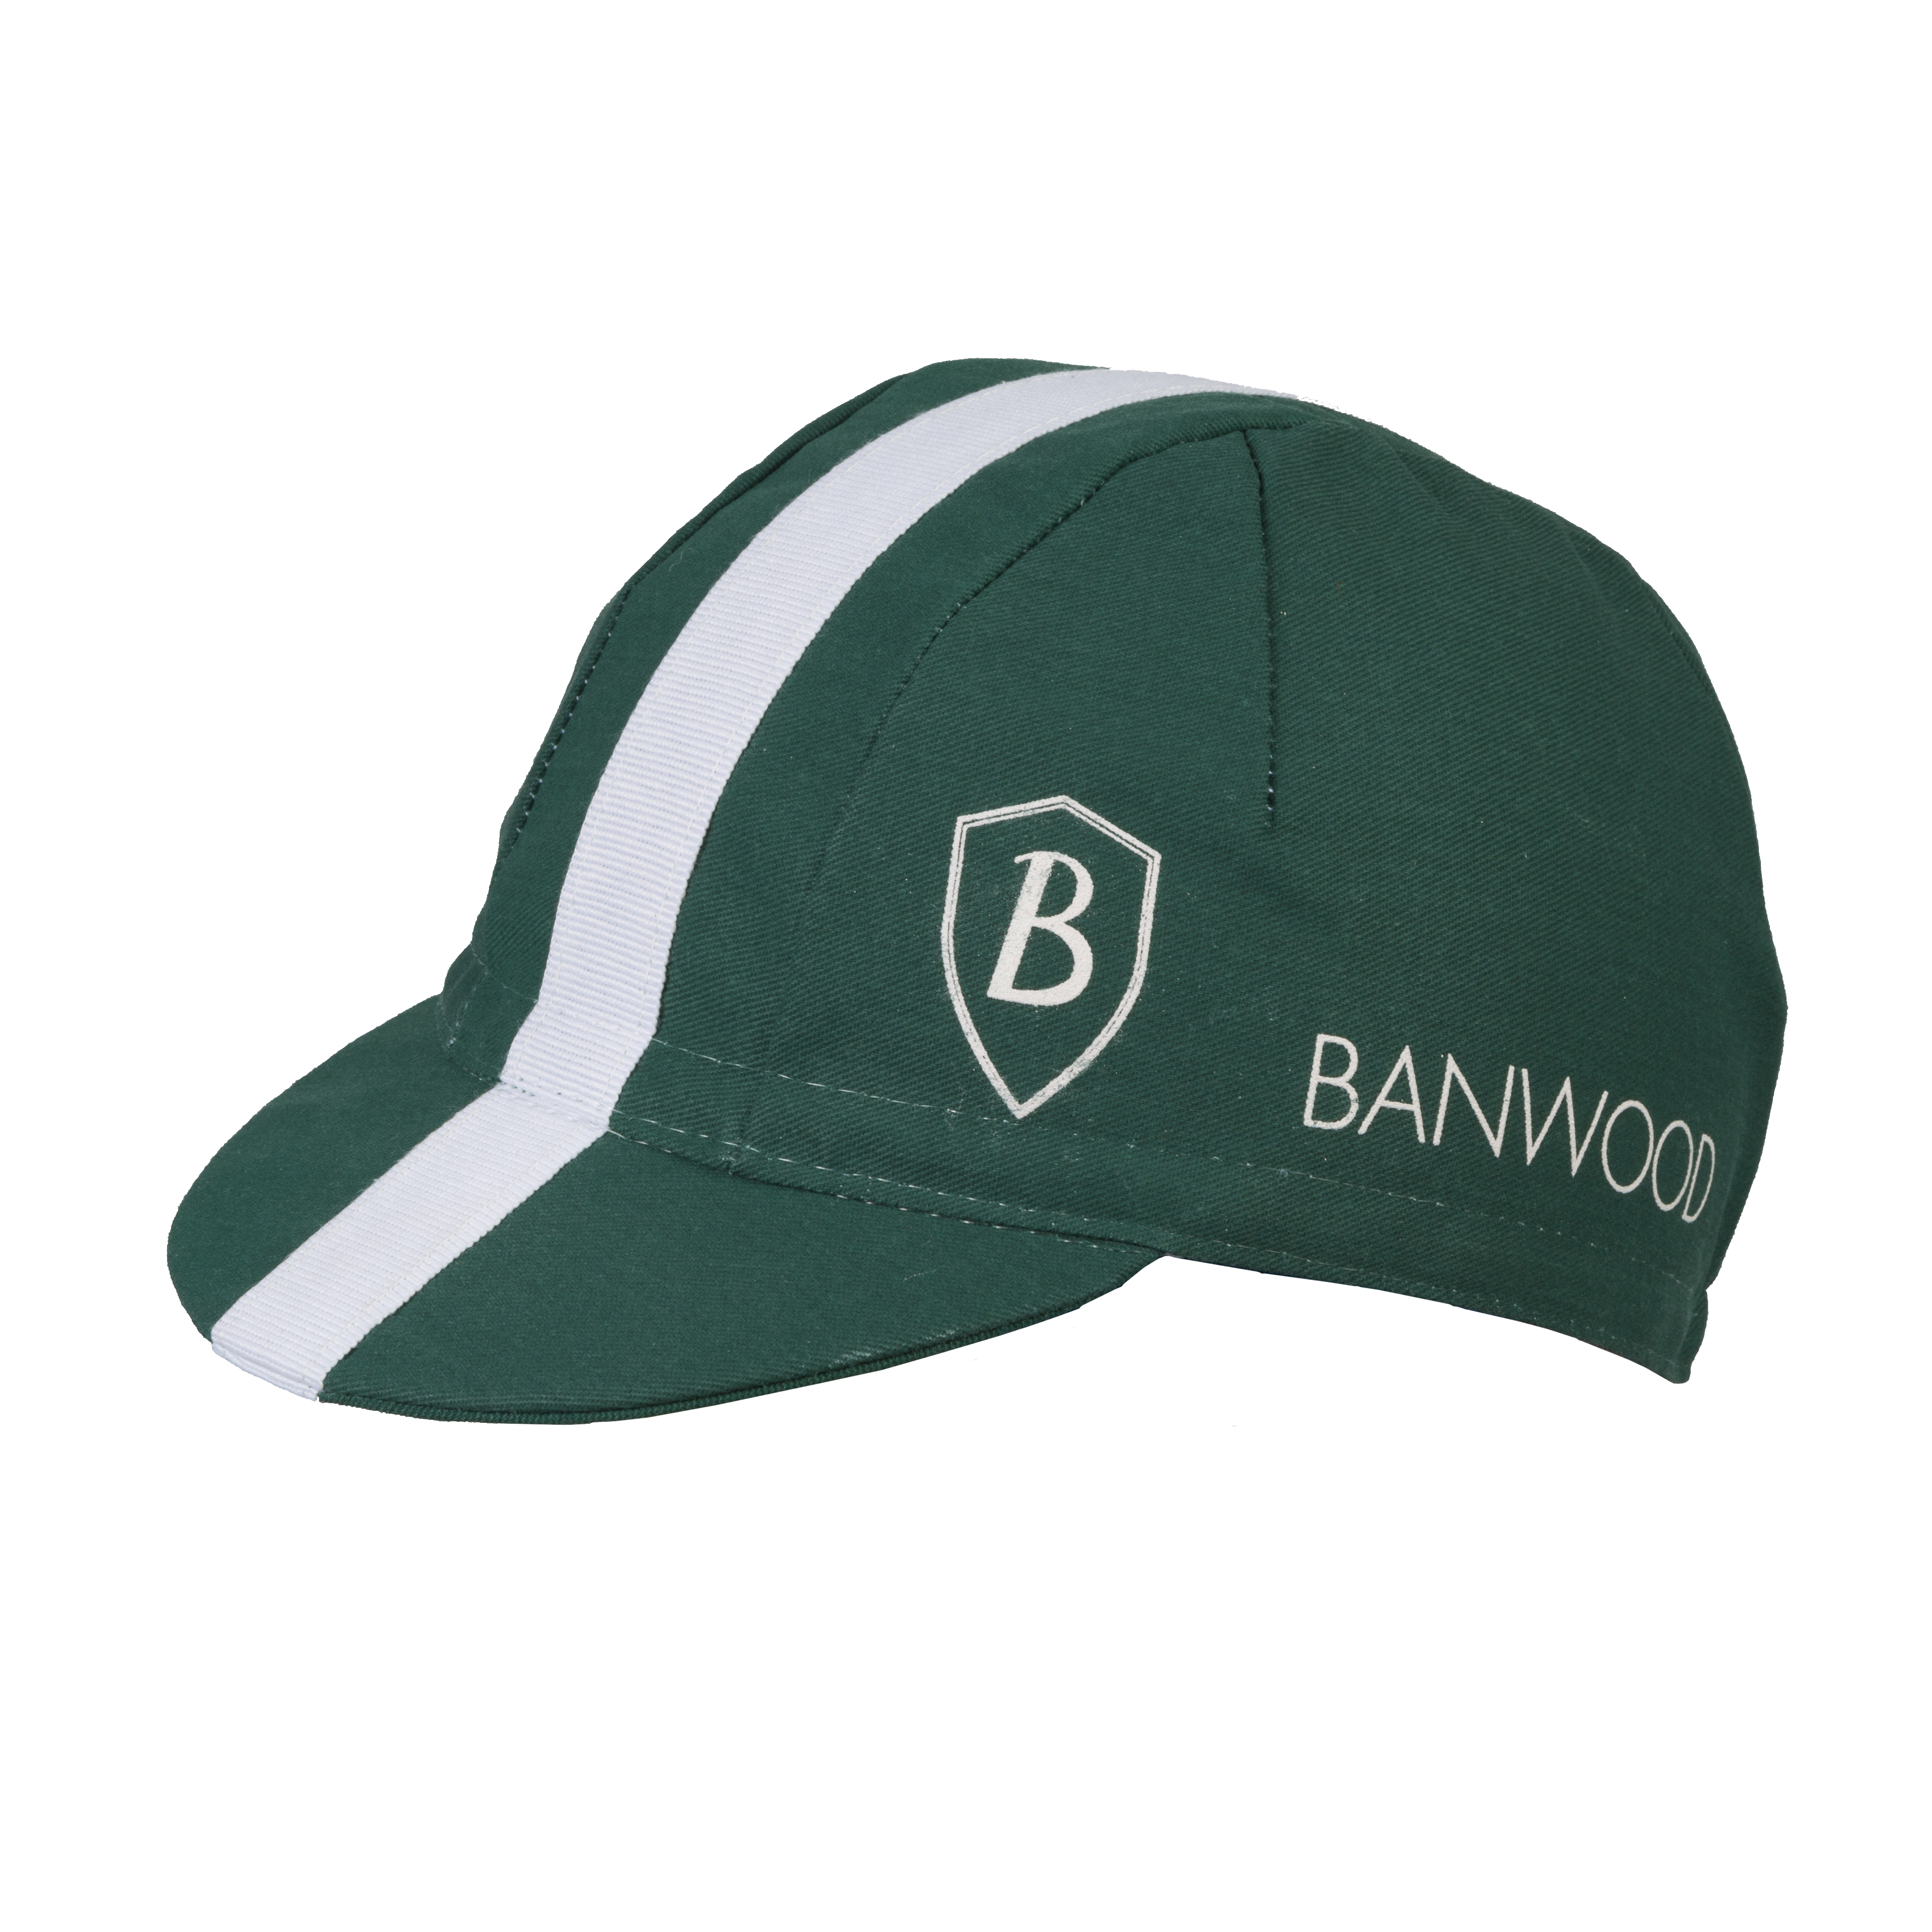 BANWOOD RACE CAP, roheline